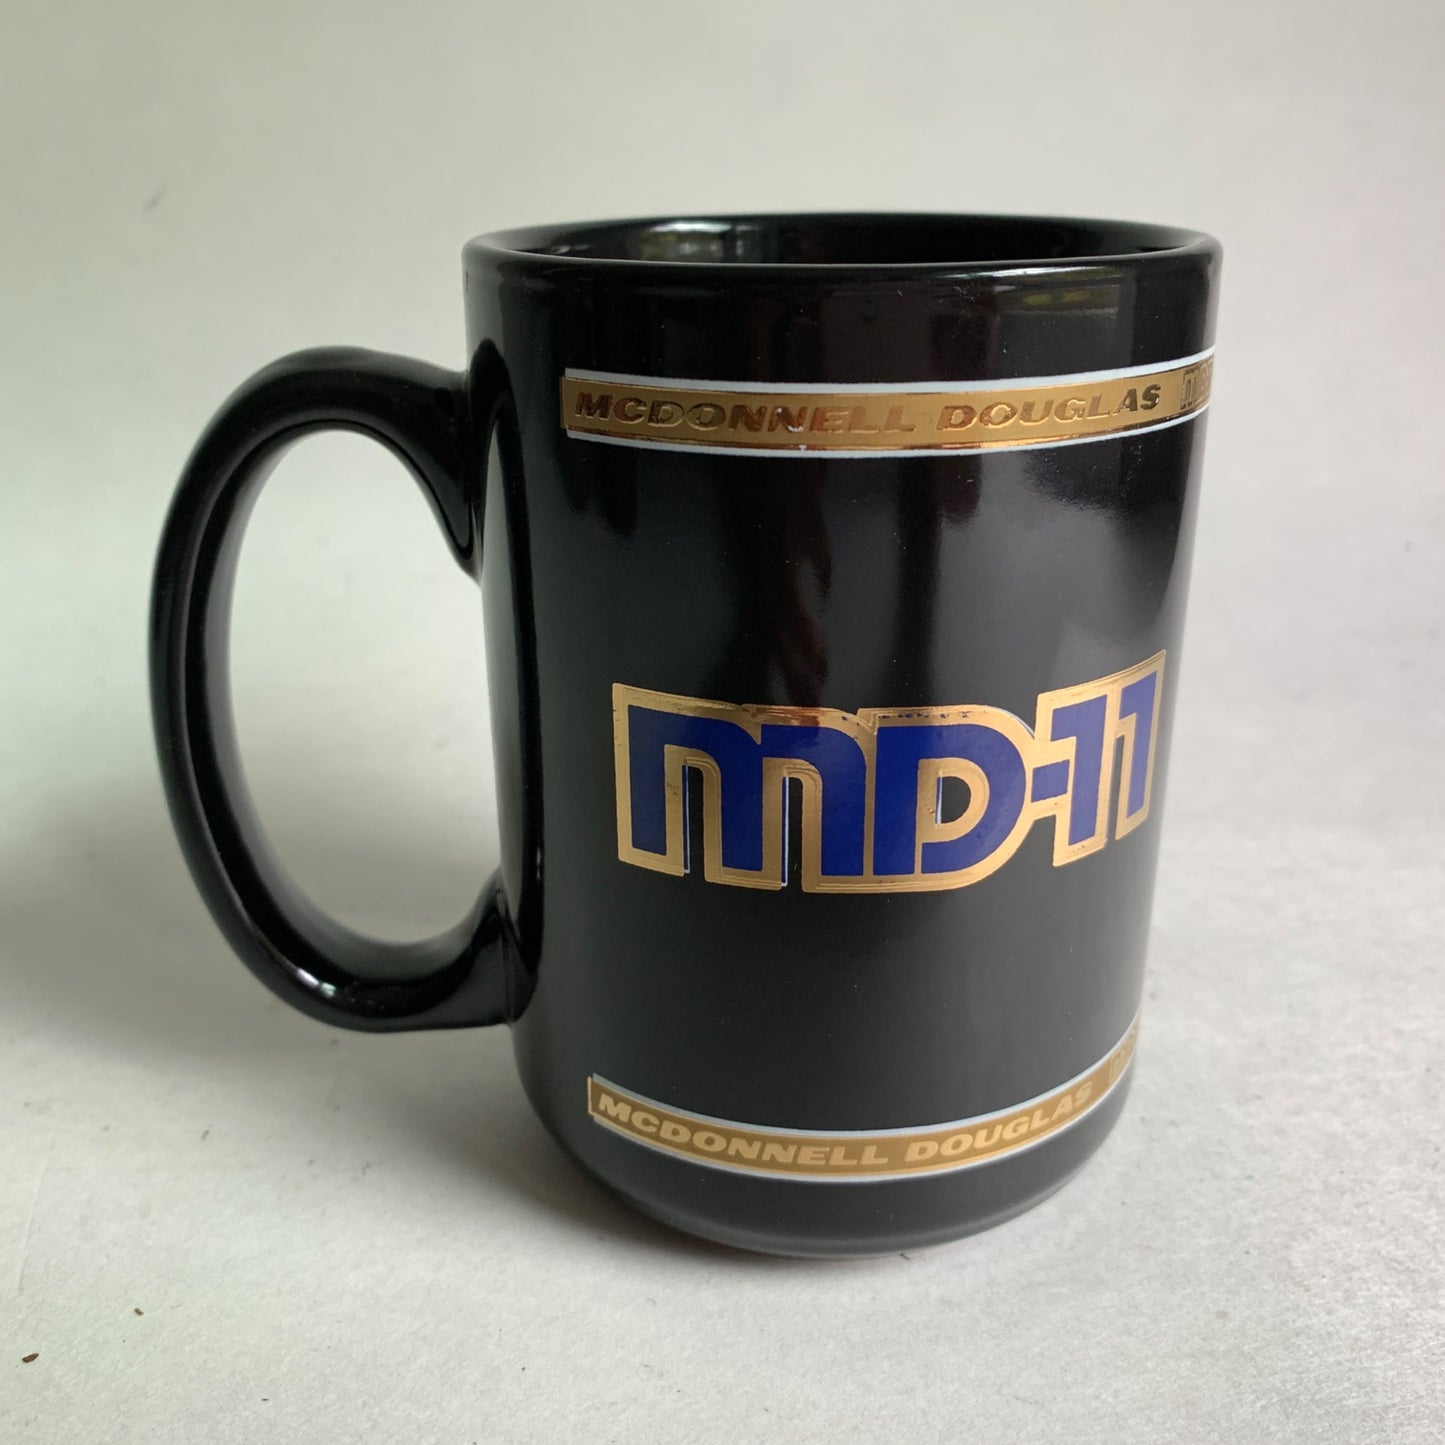 MD-11 Coffee Mug Black McDonnell Douglas